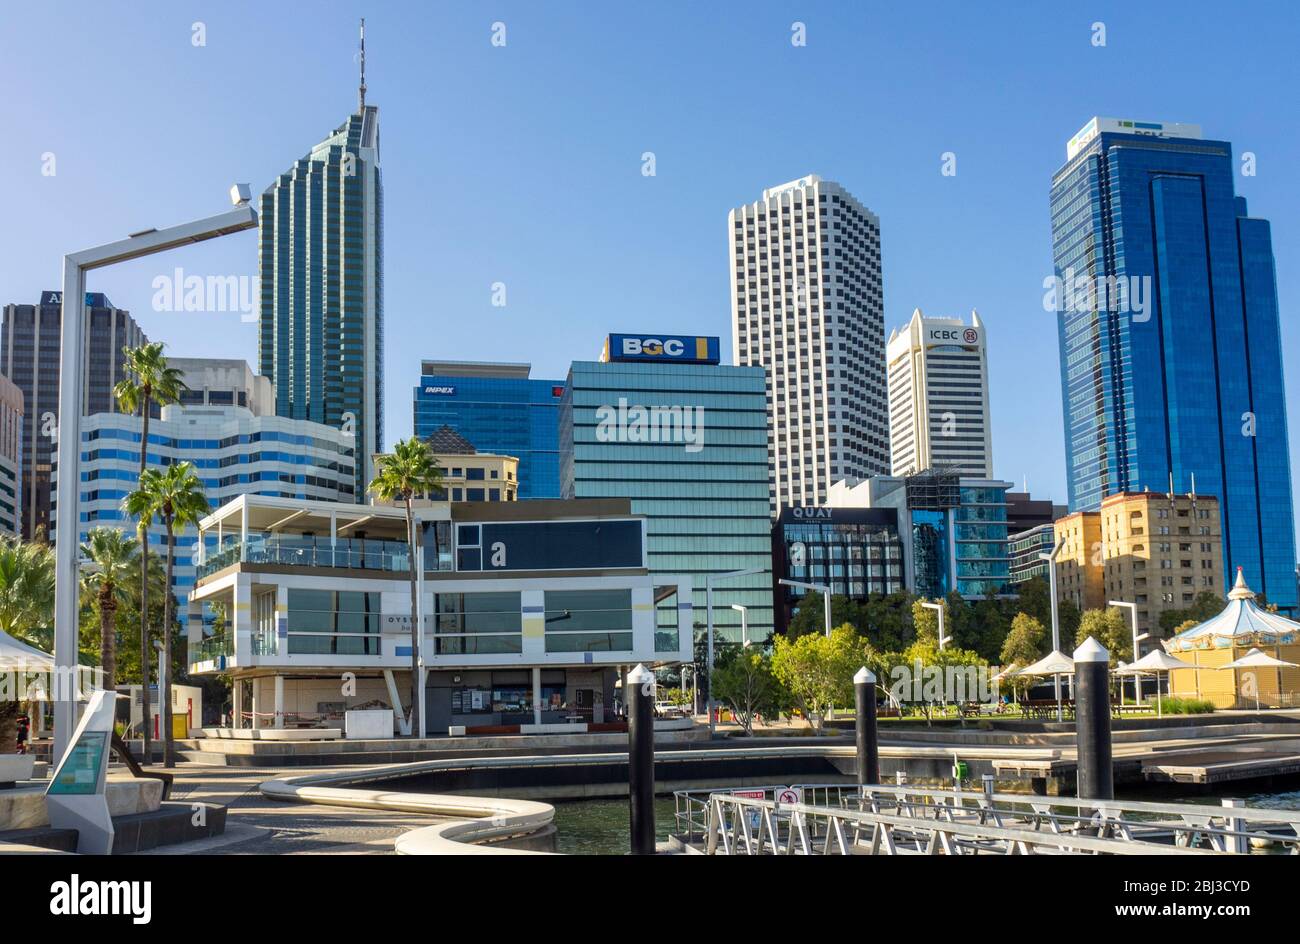 Torres de oficinas Allendale Square, Exchange Plaza, St Martins Tower BGC Center y South32 Tower con vistas a Elizabeth Quay Perth Western Australia. Foto de stock